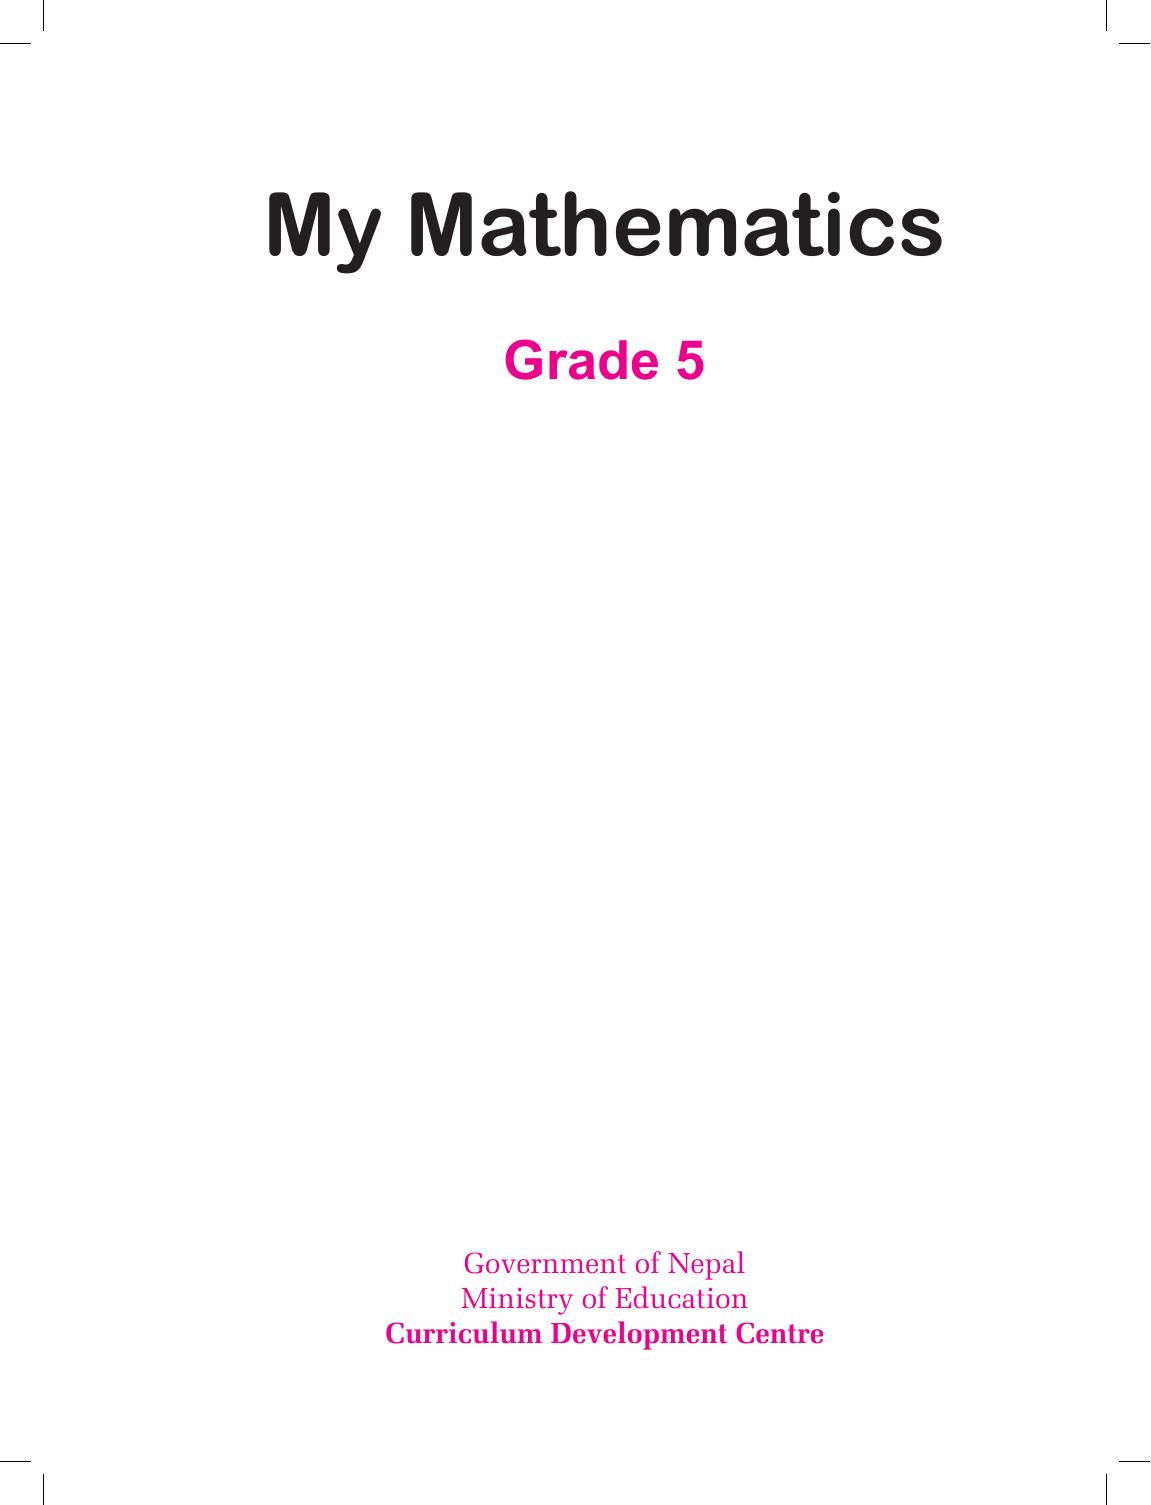 CDC 2018 - My Mathematics Grade 5